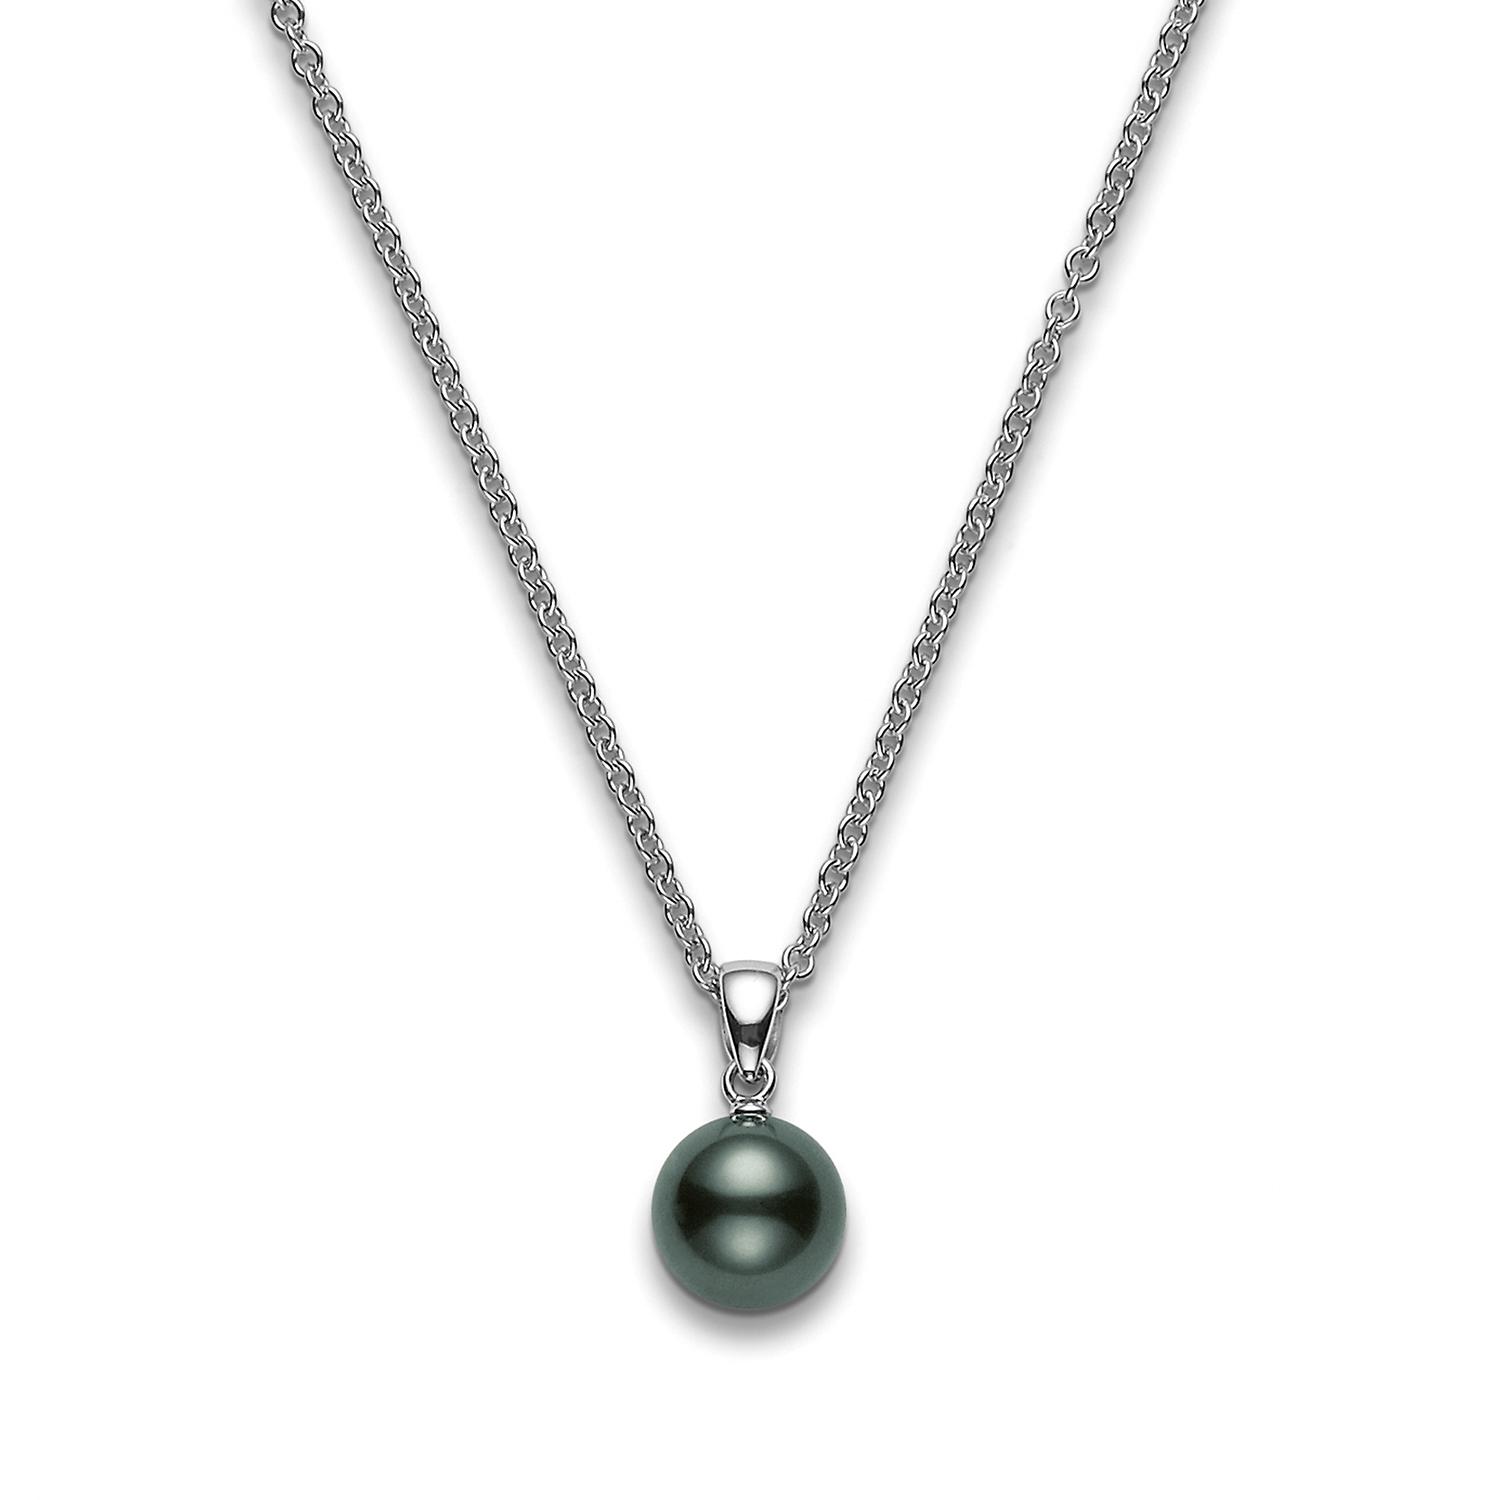 Mikimoto 8mm A Black South Sea Pearl Pendant Necklace